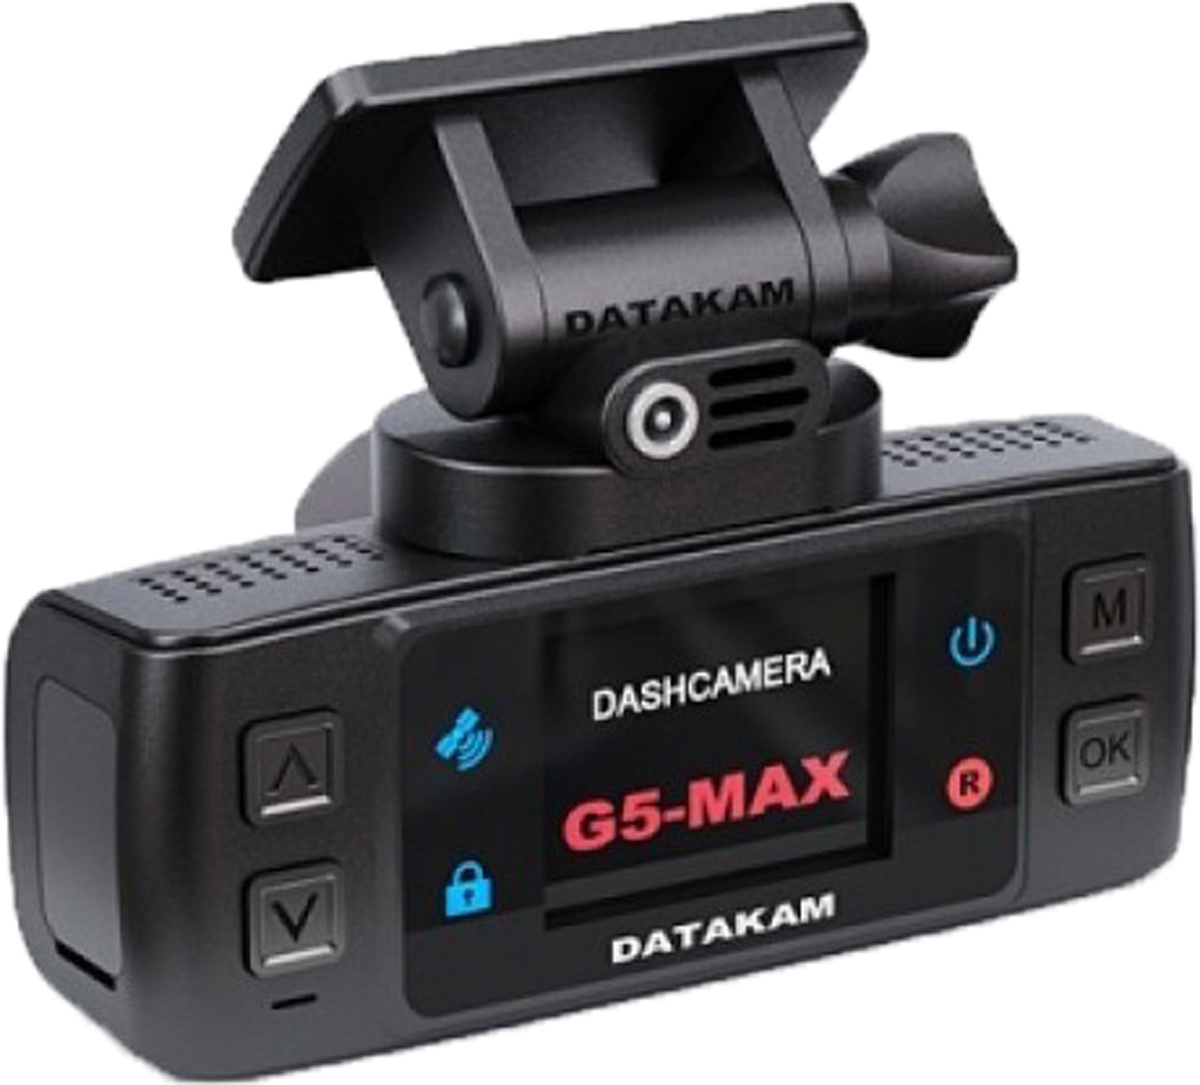 Купить недорогой регистратор. DATAKAM Duo Pro. DATAKAM g5 real. DATAKAM g5 real bf. Видеорегистратор DATAKAM g5 real Max, GPS, ГЛОНАСС.